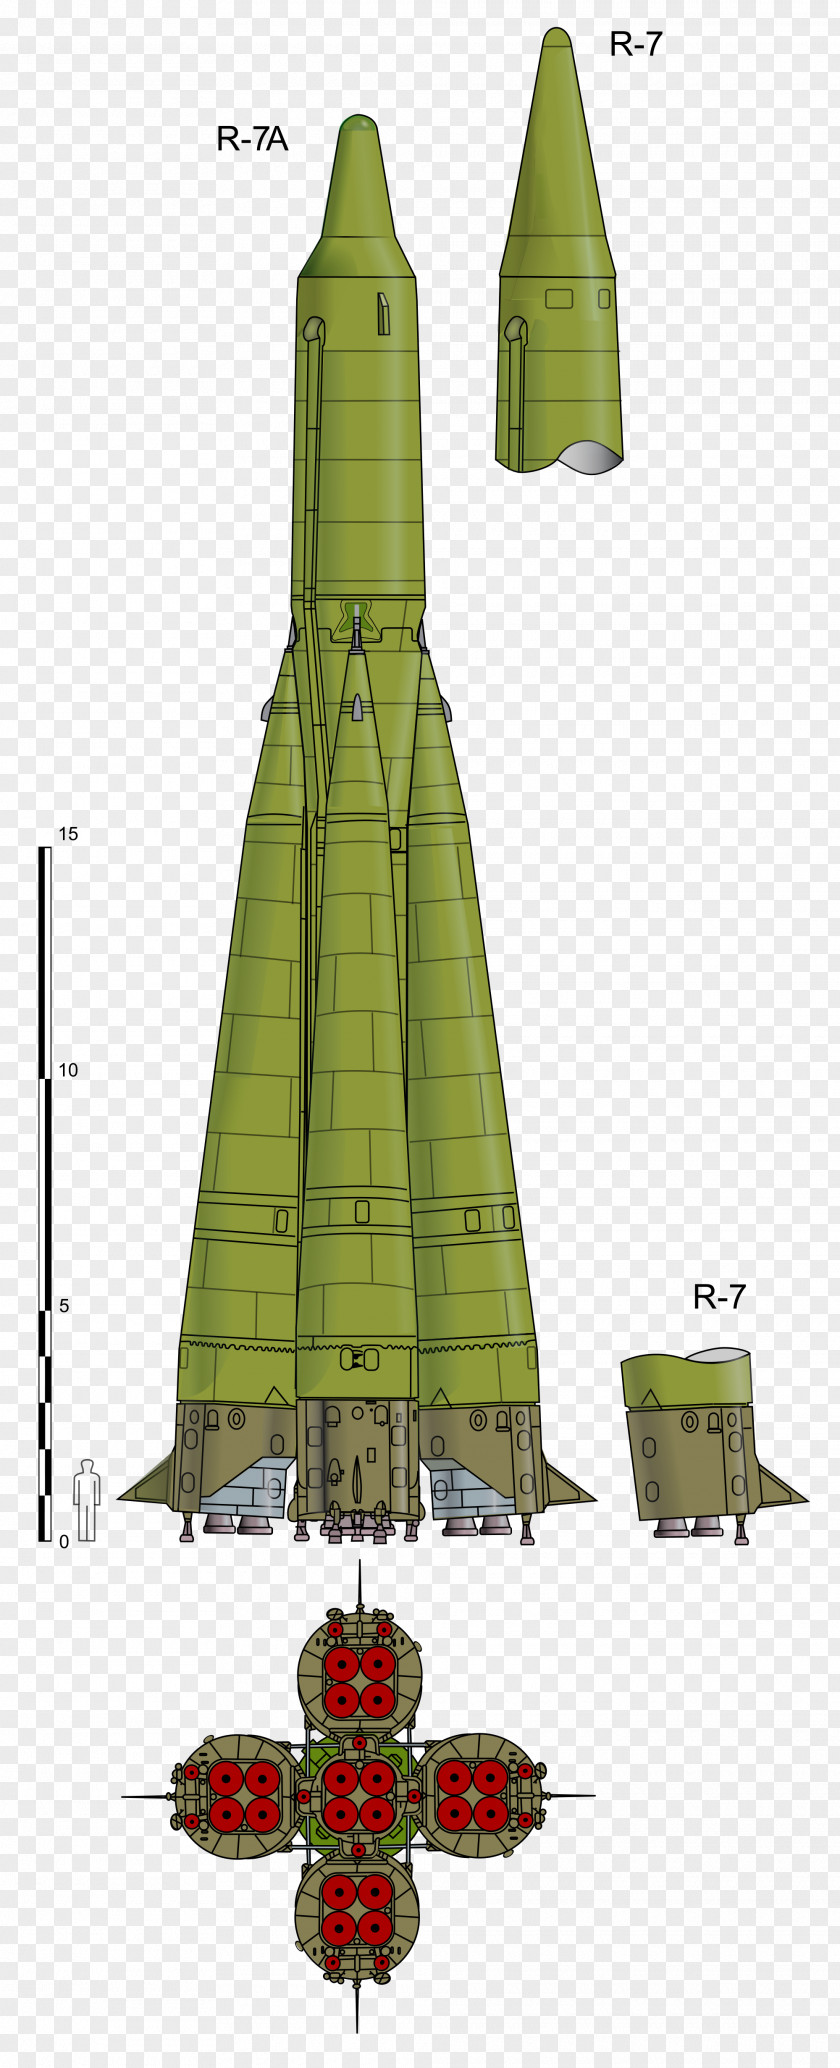 Rocket R-7 Semyorka Intercontinental Ballistic Missile Launch Vehicle PNG